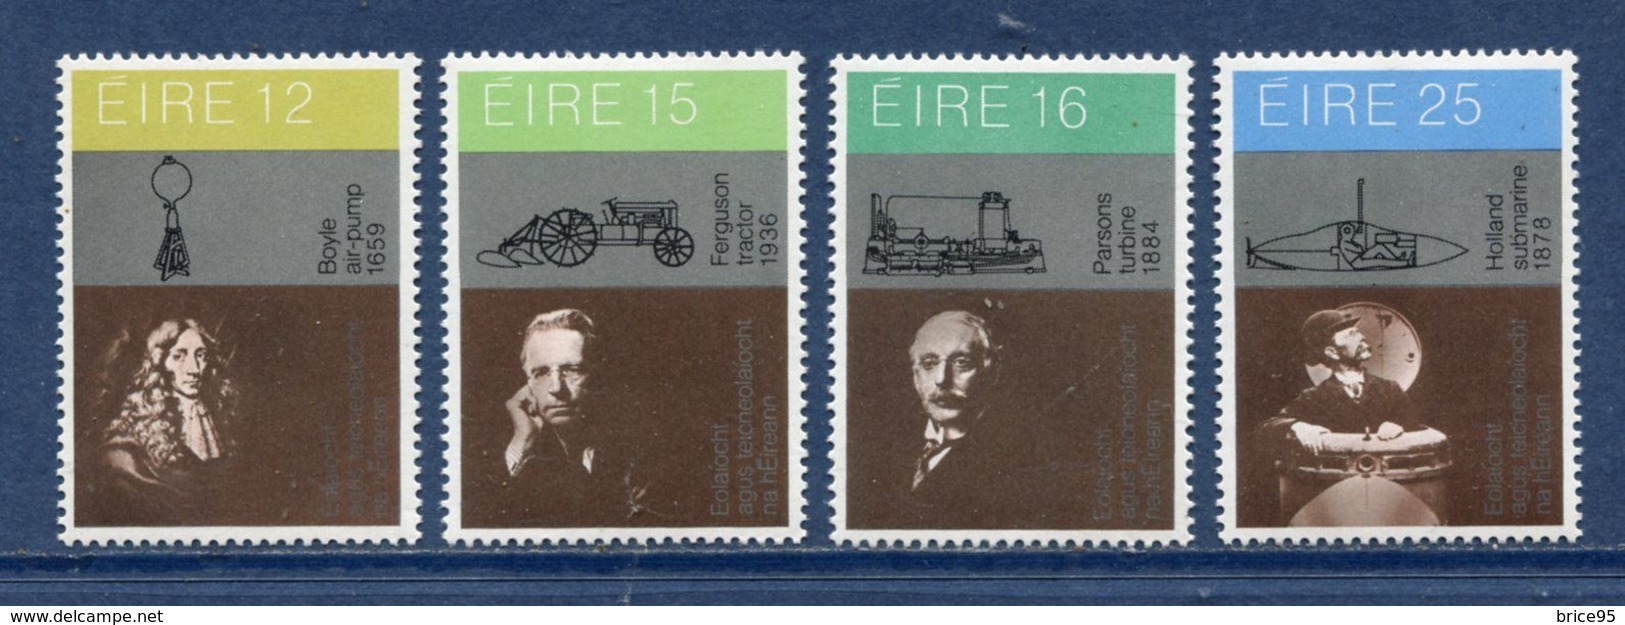 Irlande - YT N° 436 à 439 - Neuf Sans Charnière - 1981 - Unused Stamps